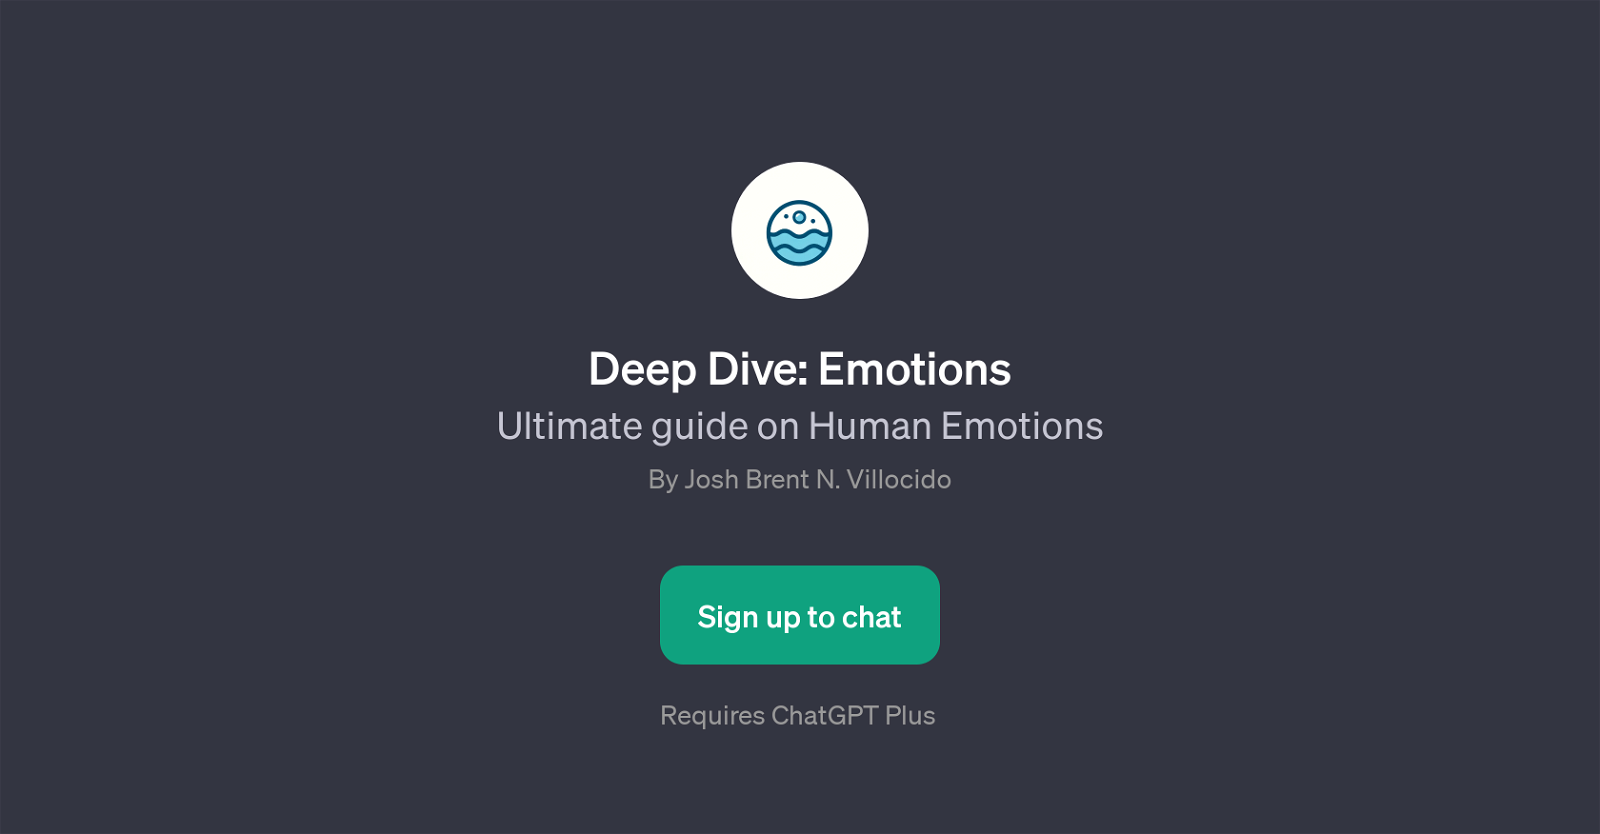 Deep Dive: Emotions website